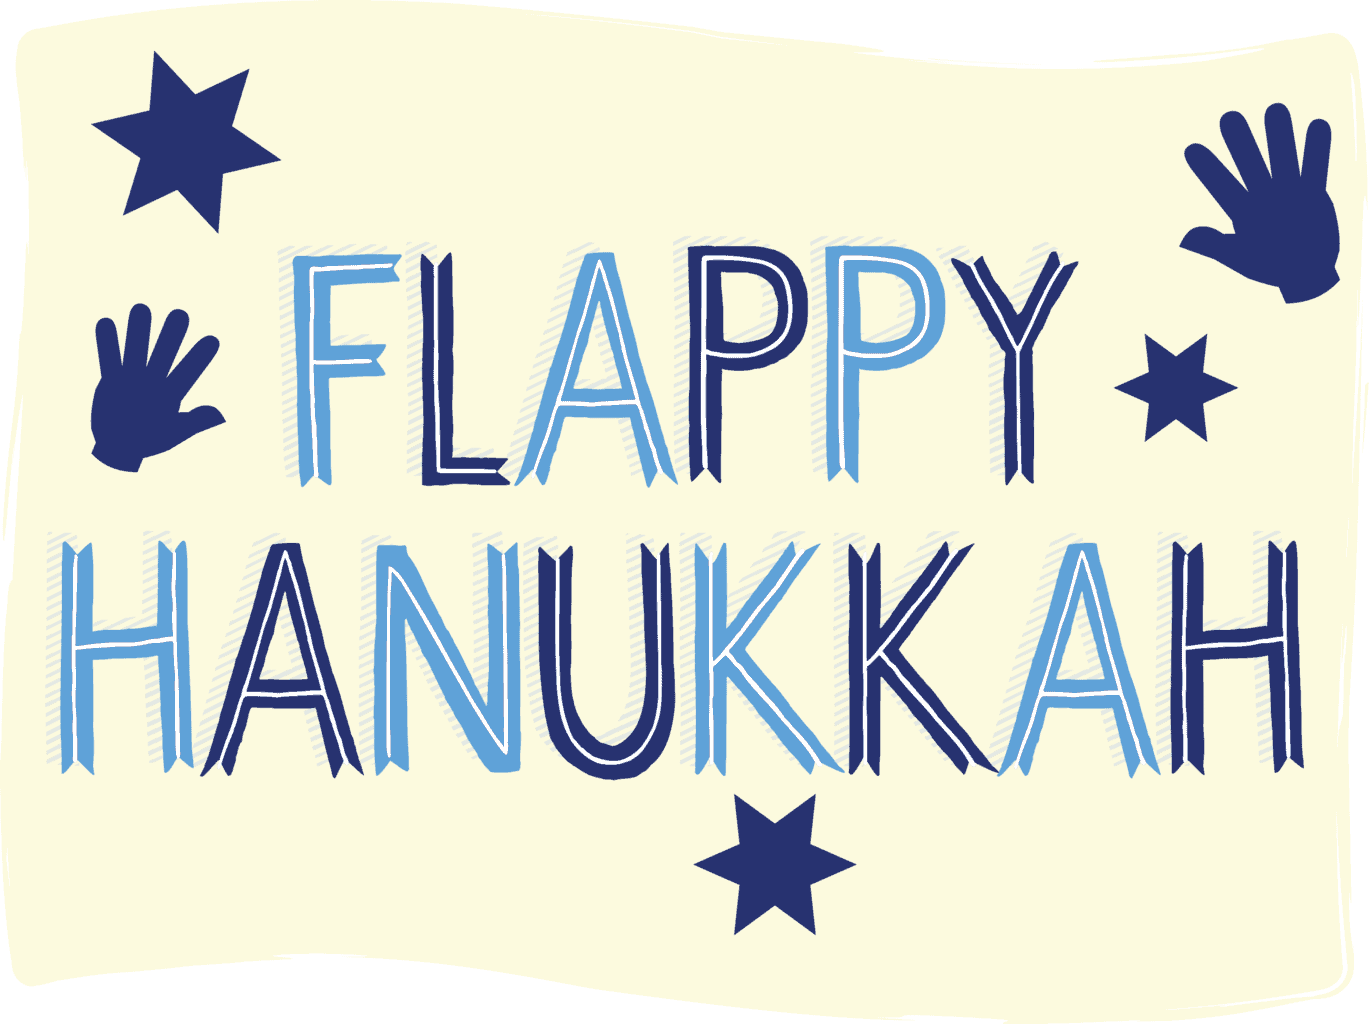 Flappy Hanukkah